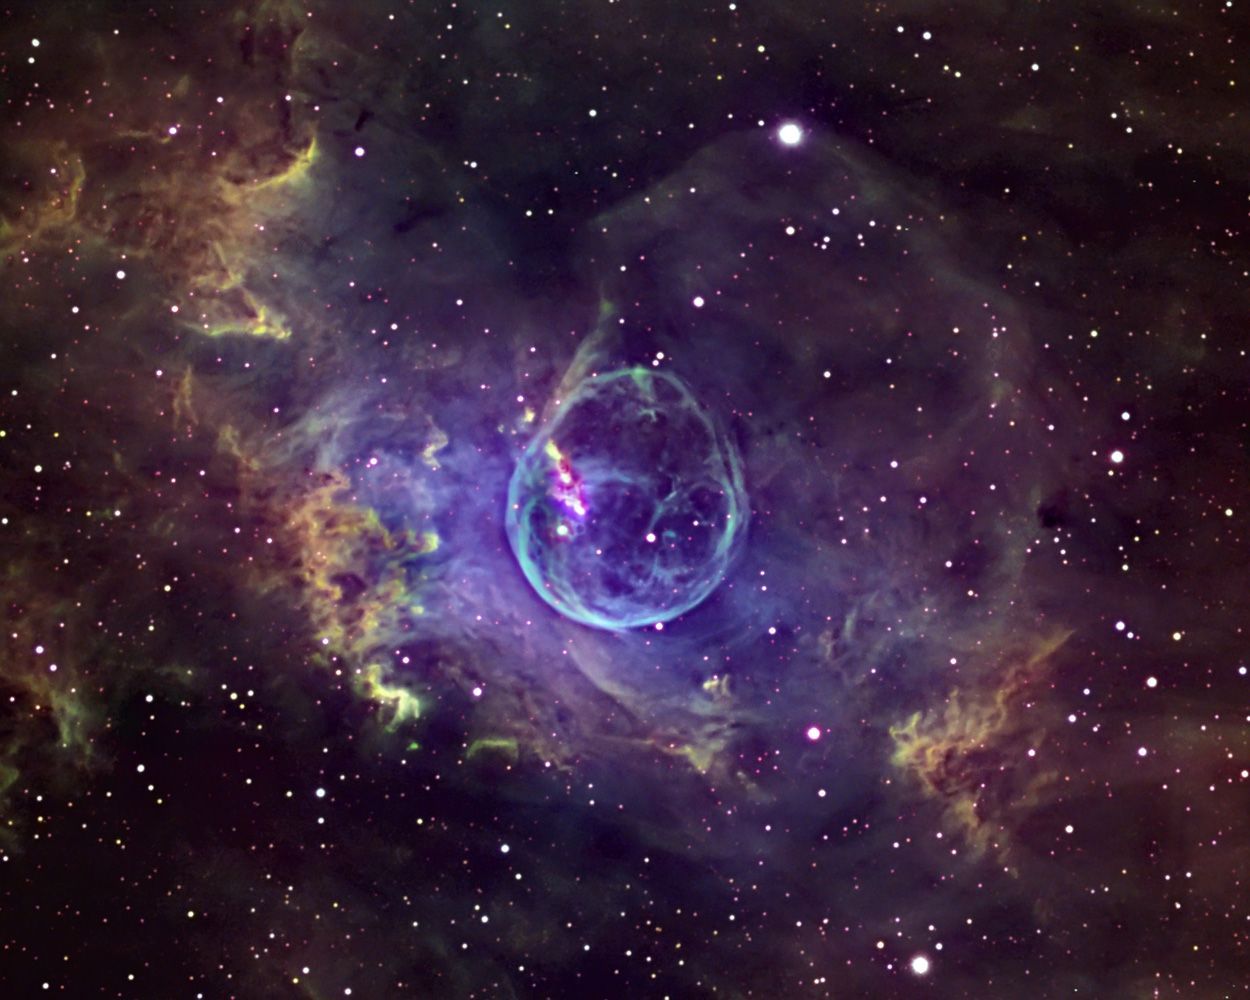 The Bubble Nebula is a H II region emission nebula in